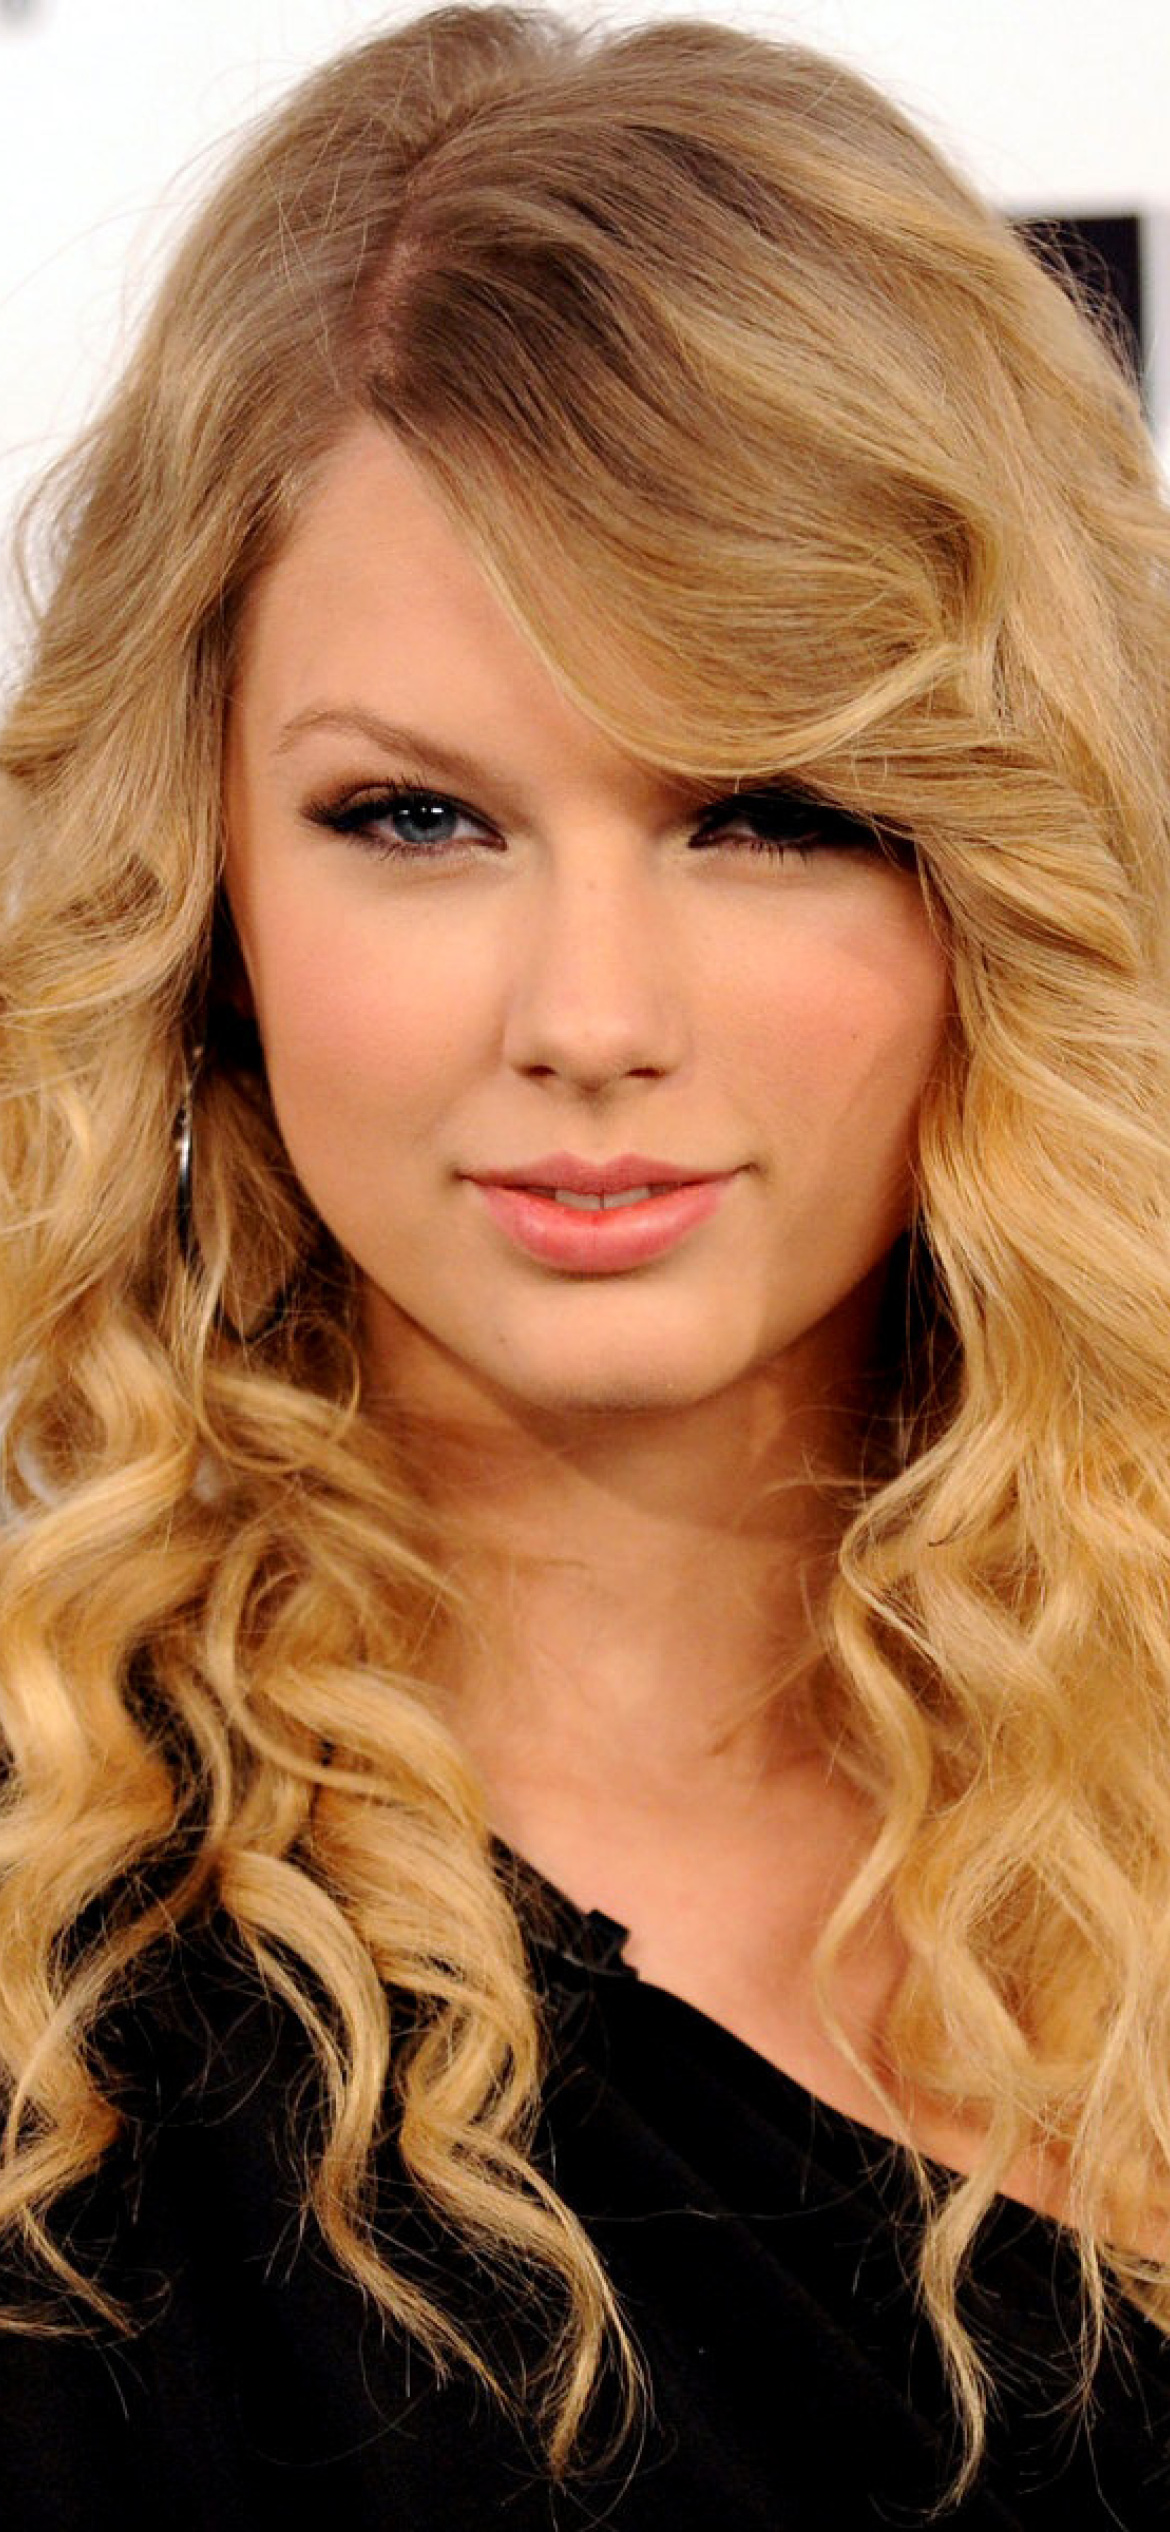 Taylor Swift on MTV wallpaper 1170x2532